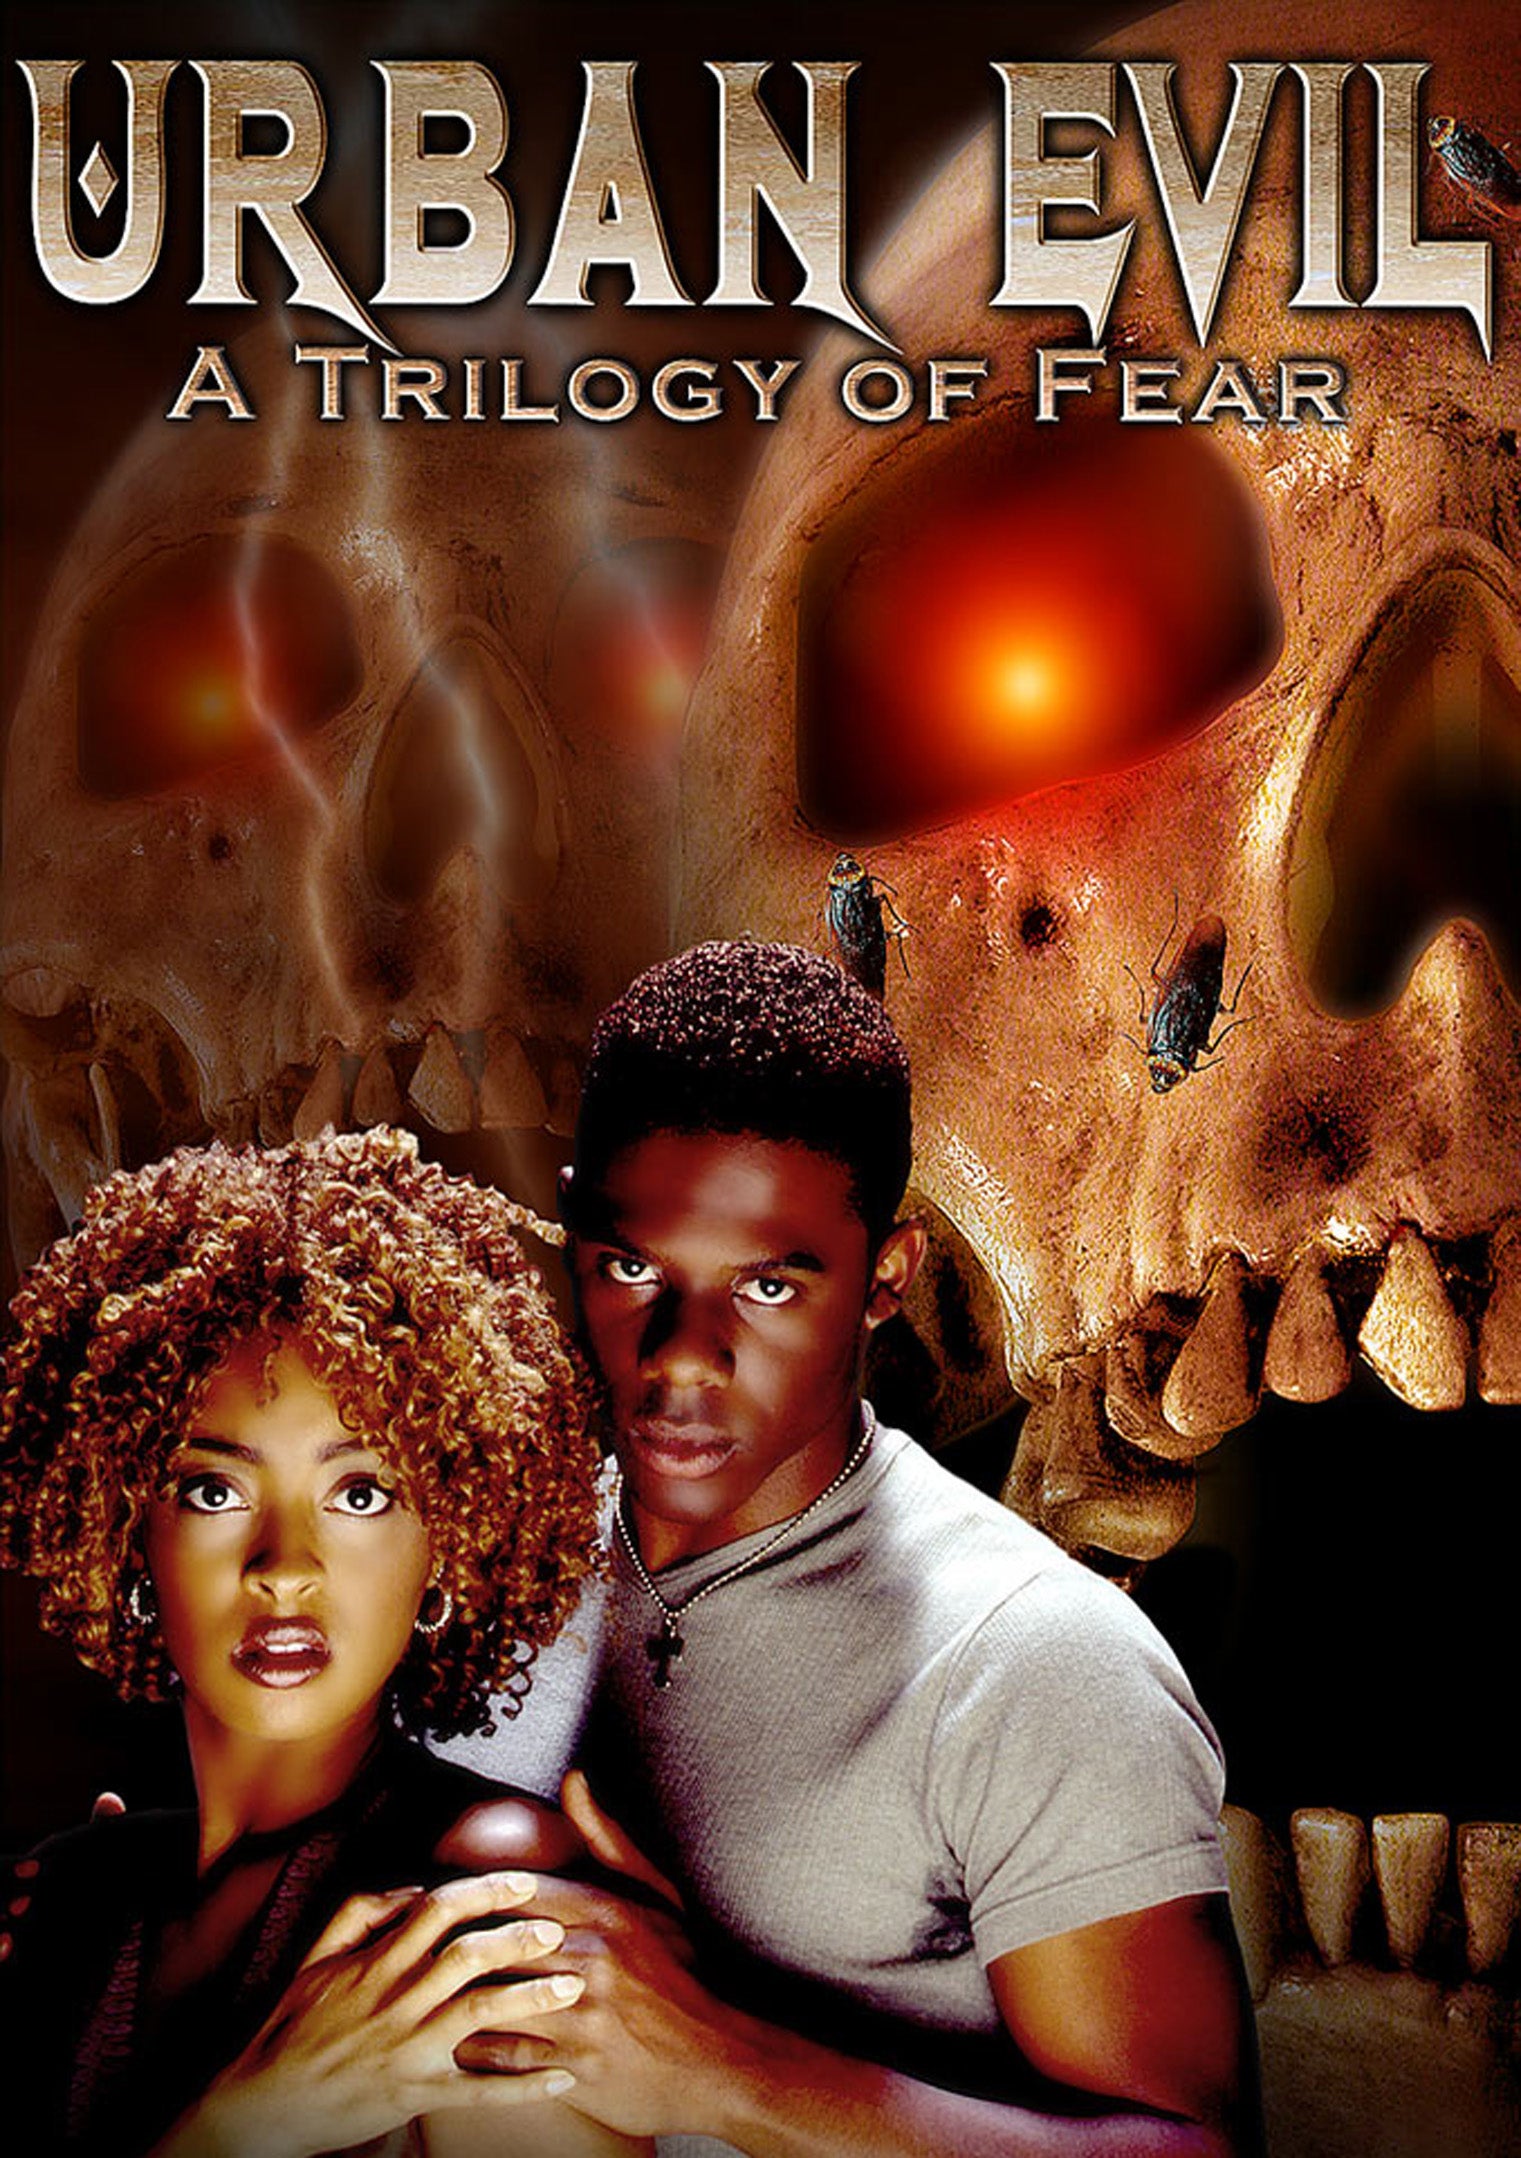 URBAN EVIL: A TRILOGY OF FEAR DVD